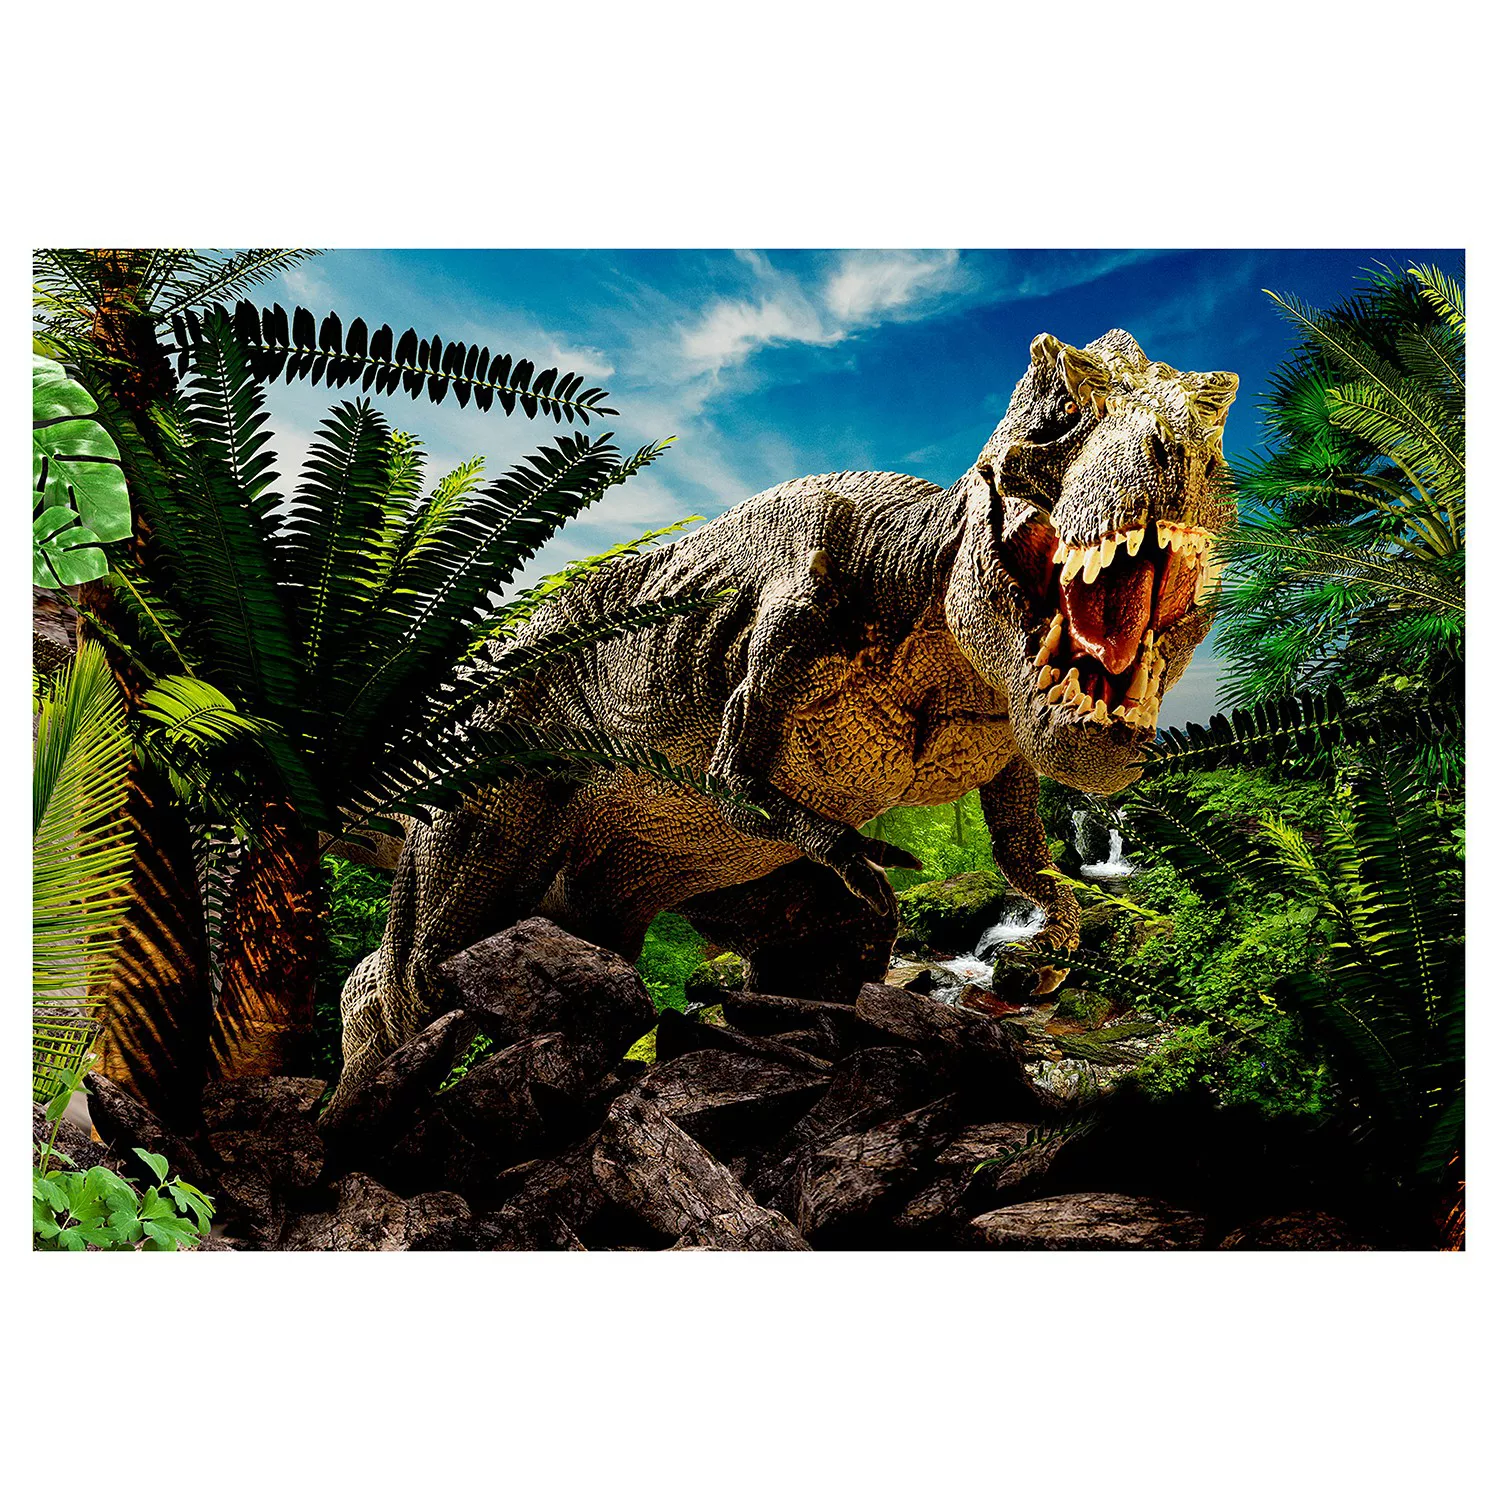 Fototapete - Angry Tyrannosaur günstig online kaufen